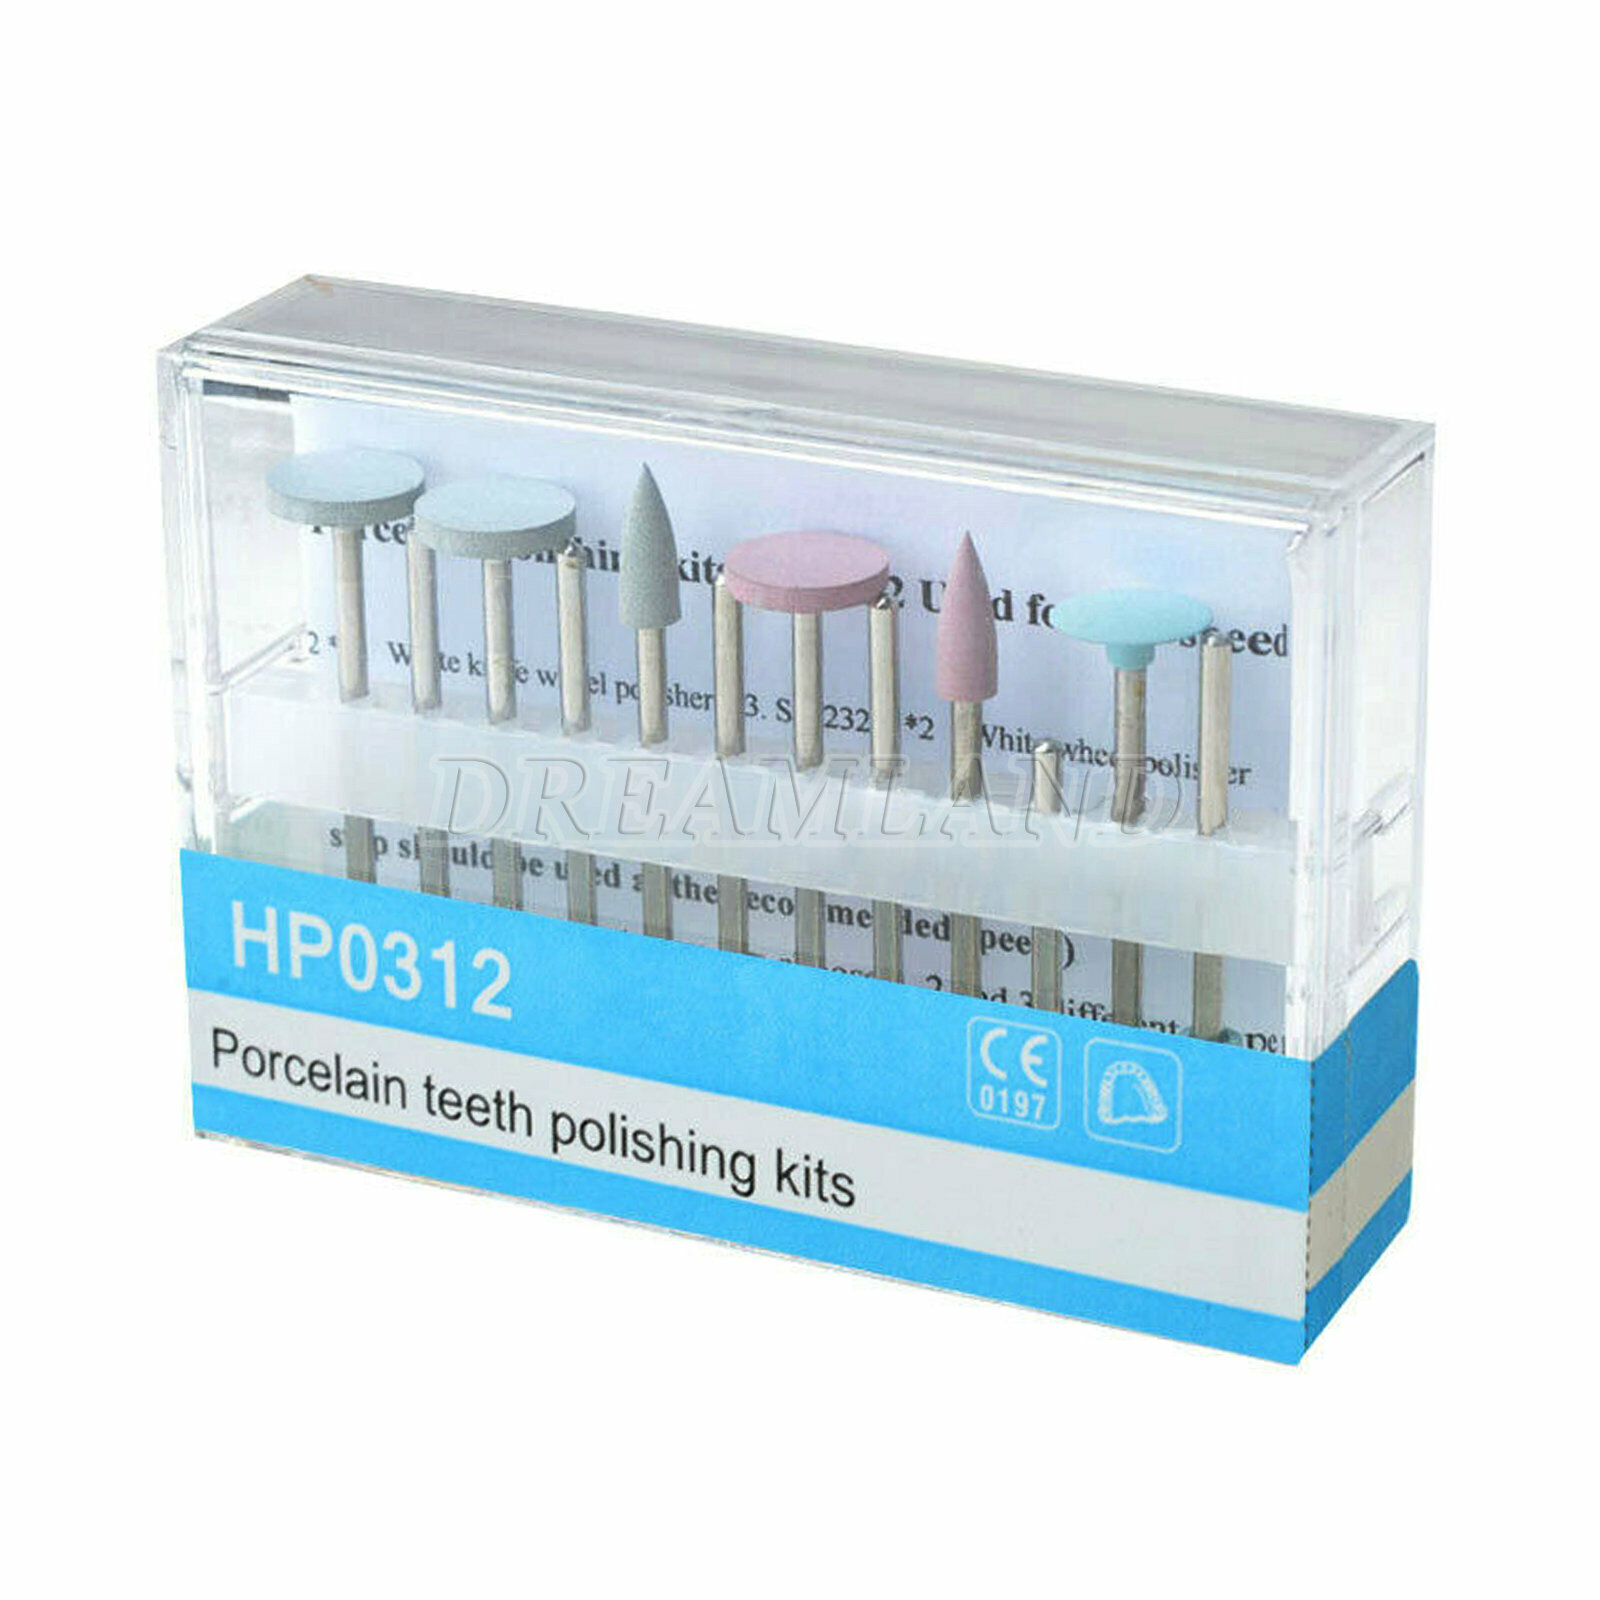 SALE Dental Porcelain teeth polishing kits HP 0312 for low-speed Handpiece